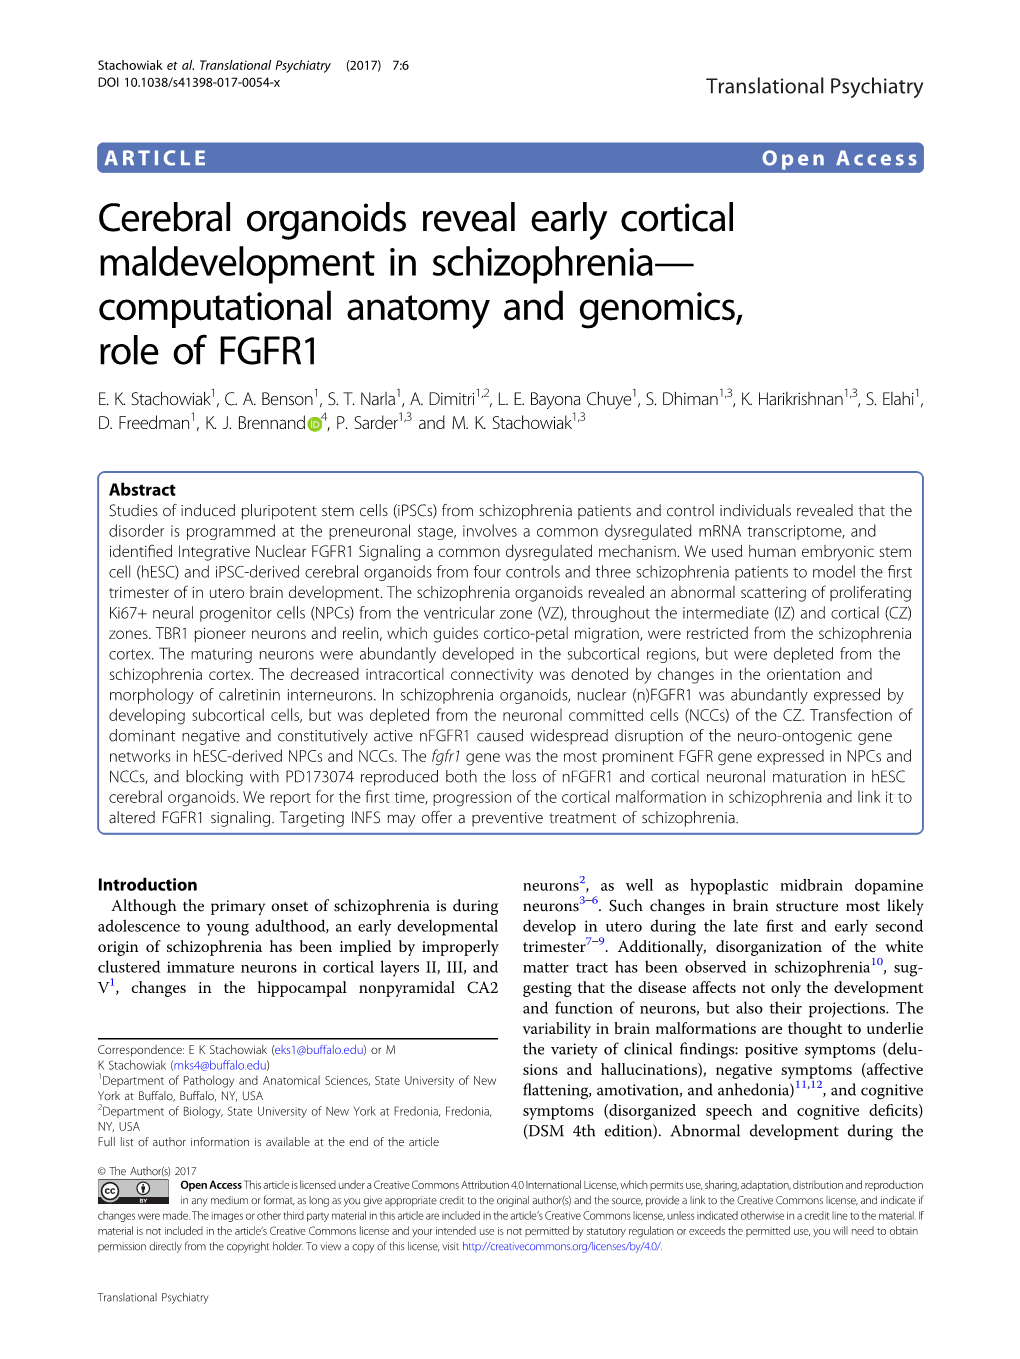 Cerebral Organoids Reveal Early Cortical Maldevelopment in Schizophrenia— Computational Anatomy and Genomics, Role of FGFR1 E